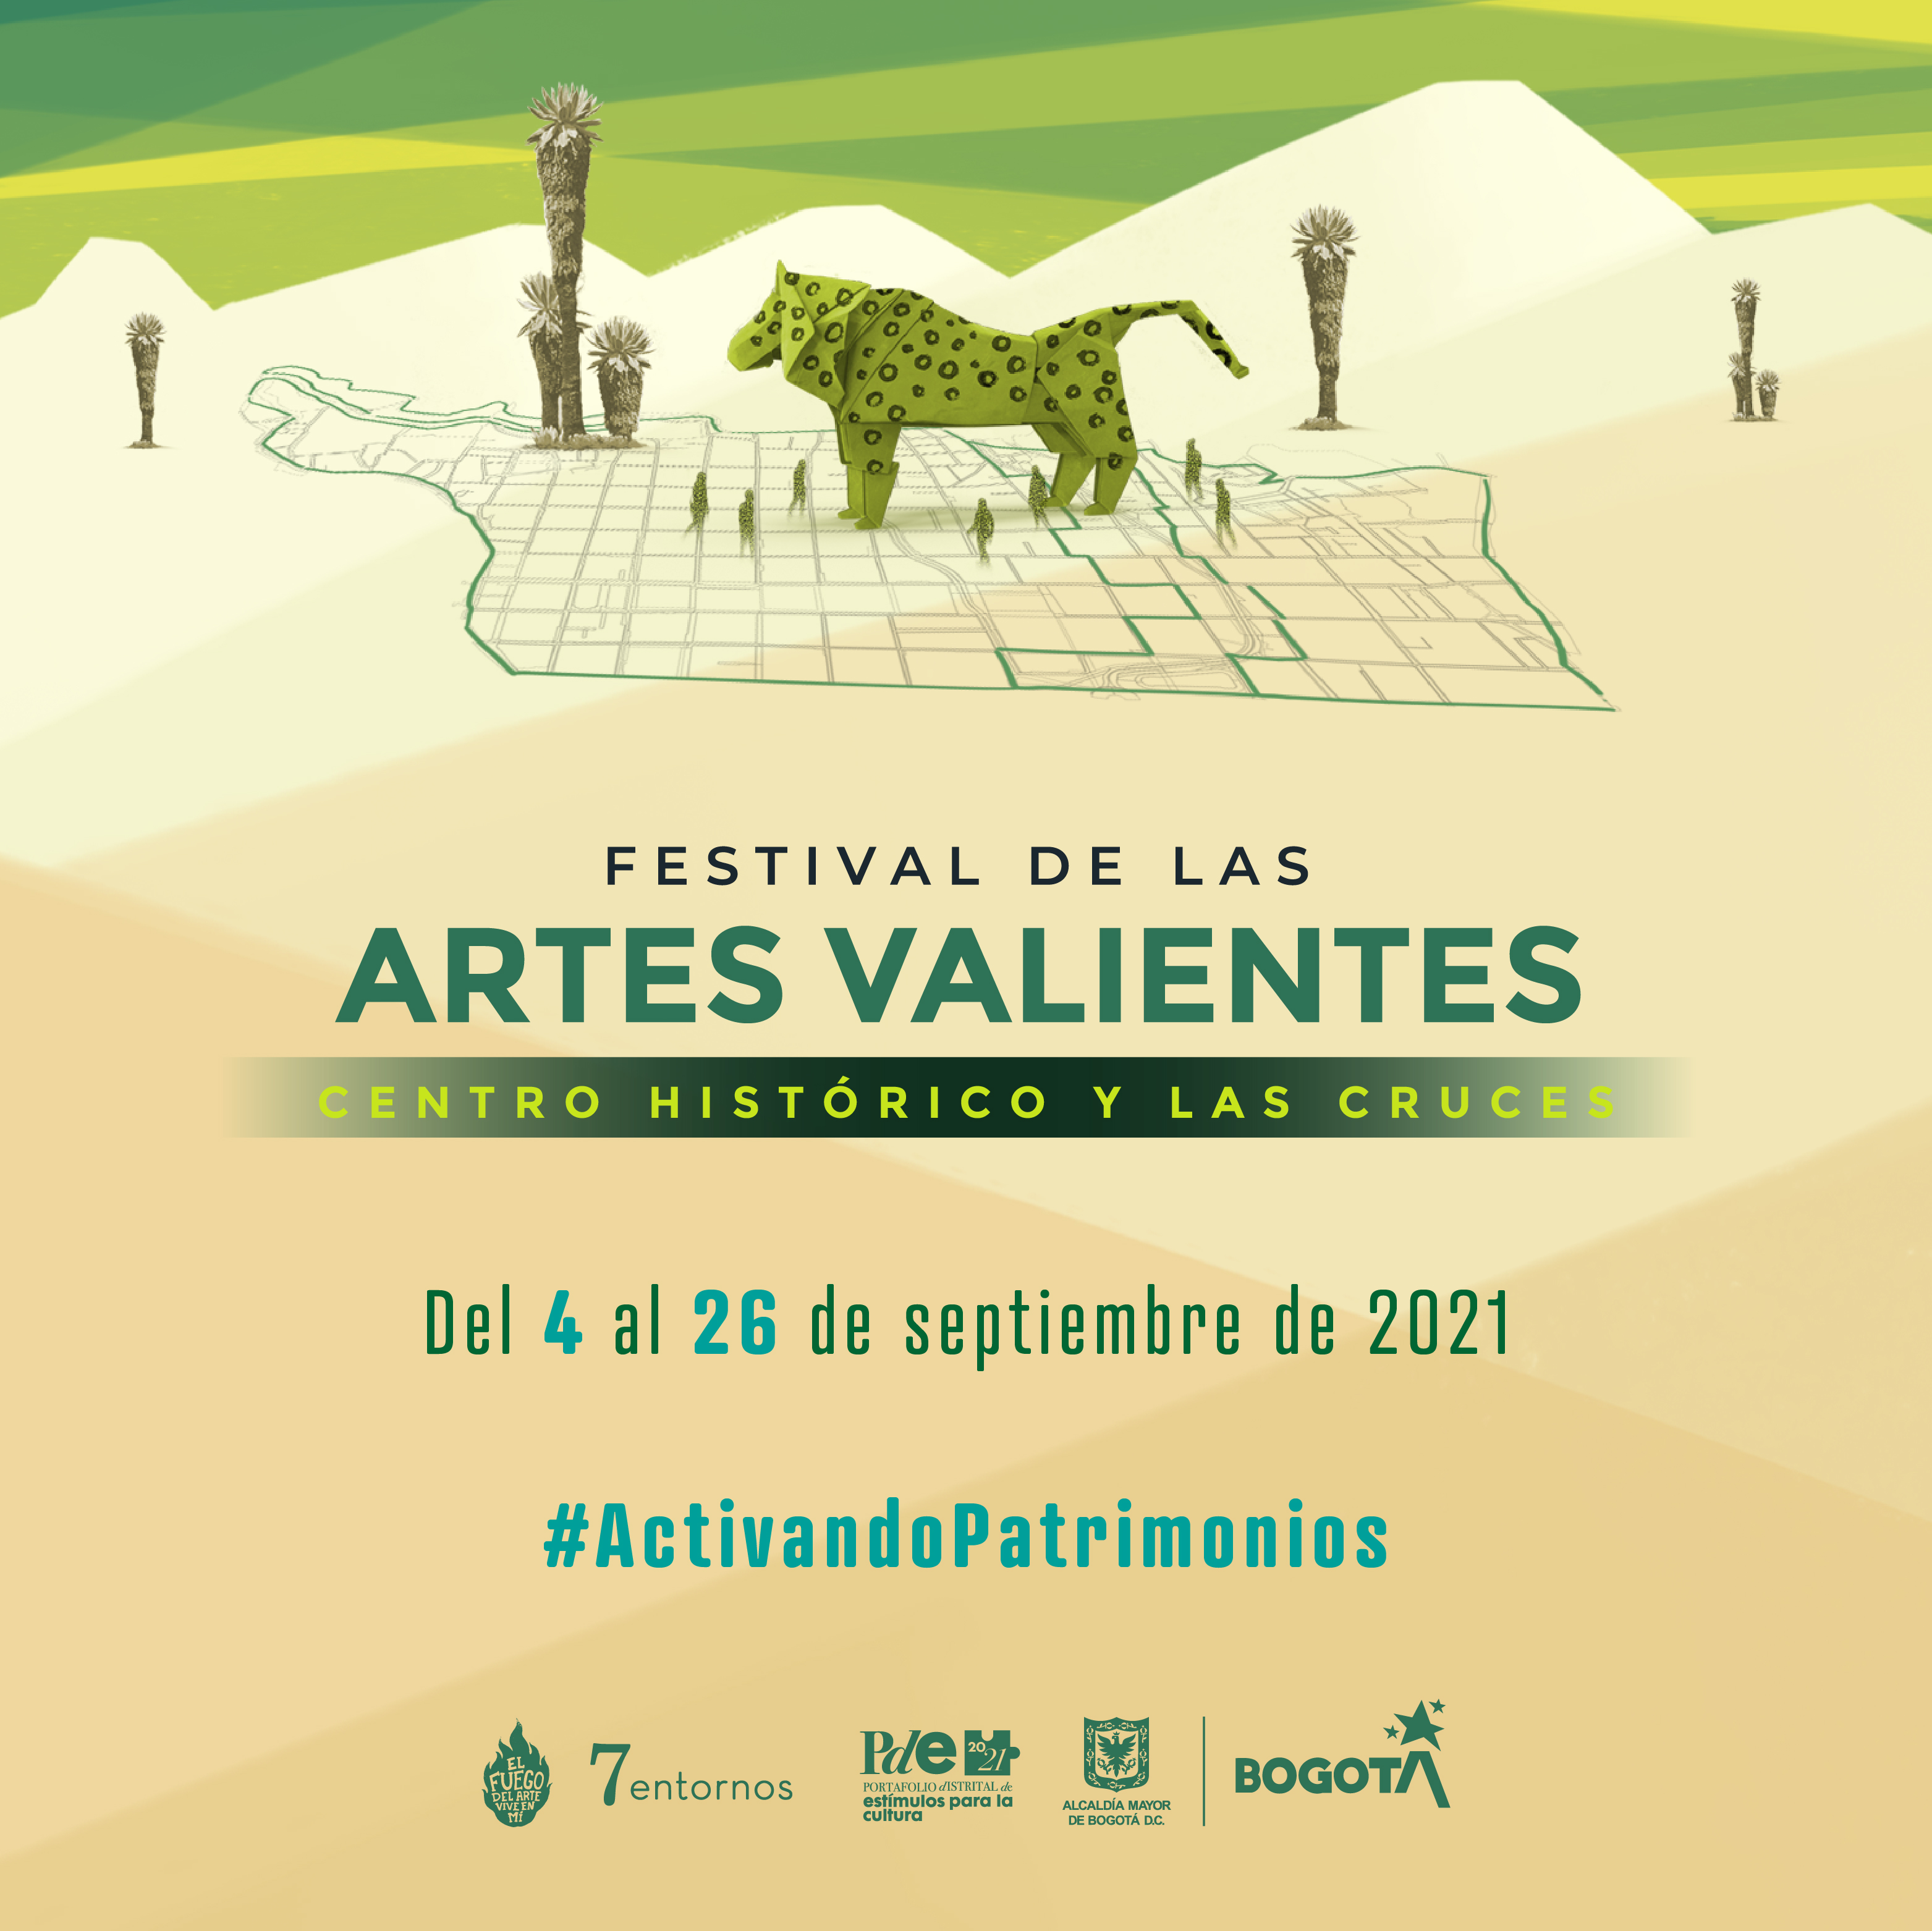 Festival de las Artes Valientes - Centro Histórico